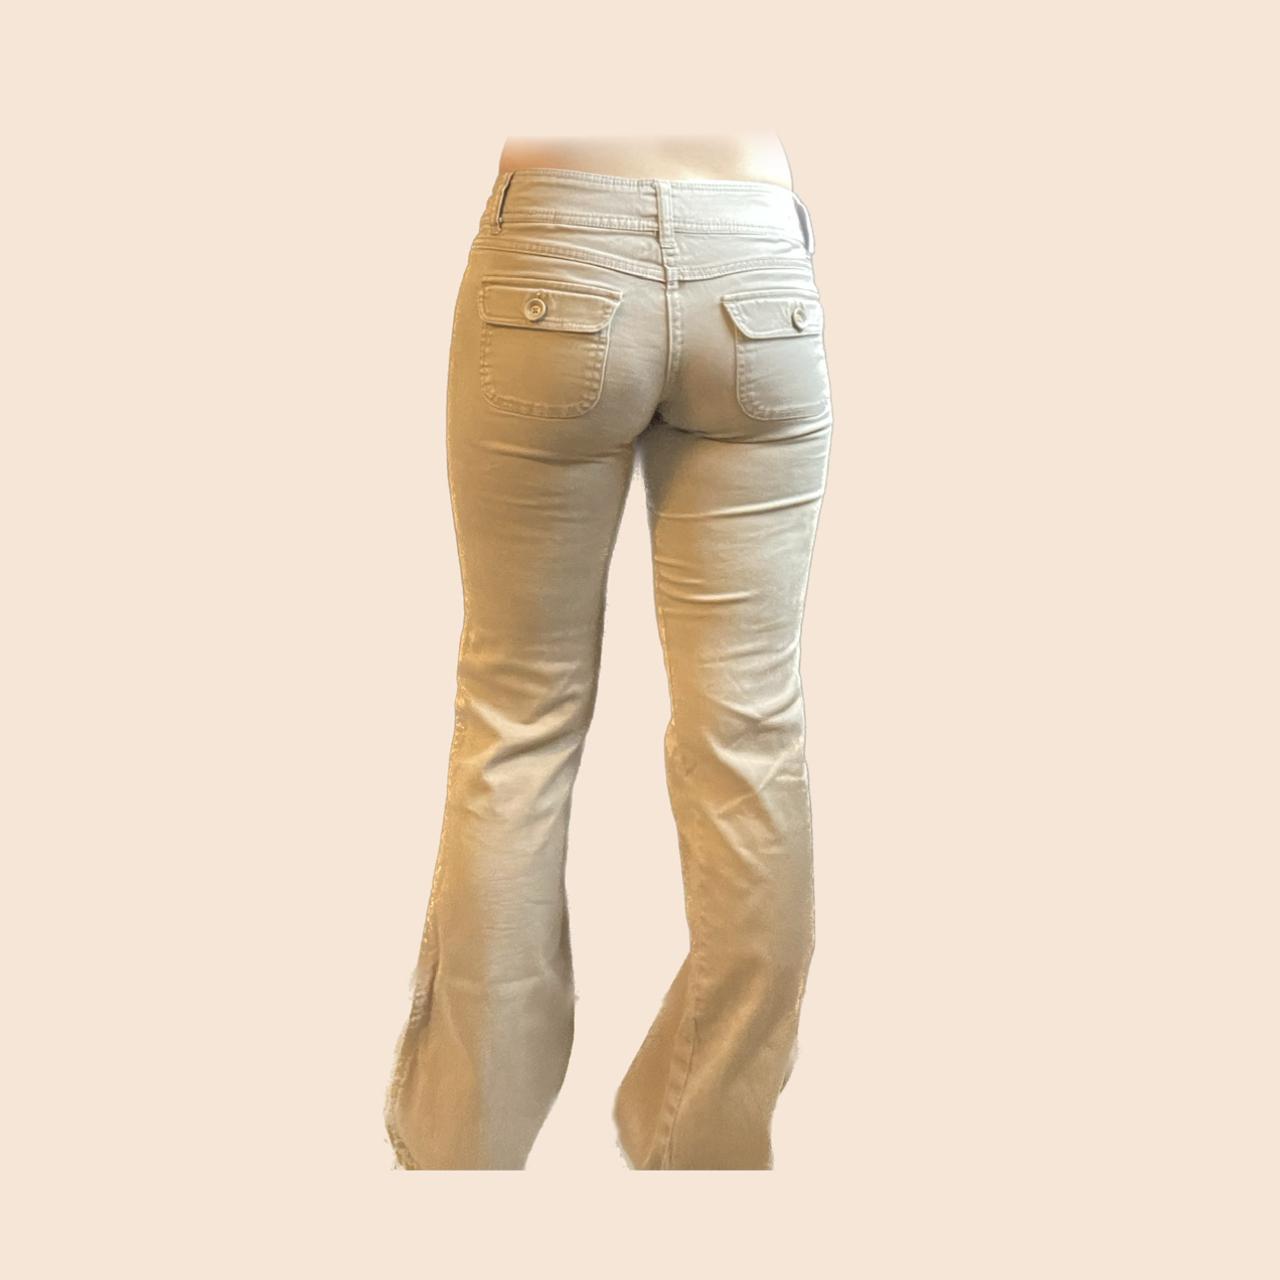 BeBop Women's Tan Jeans (2)